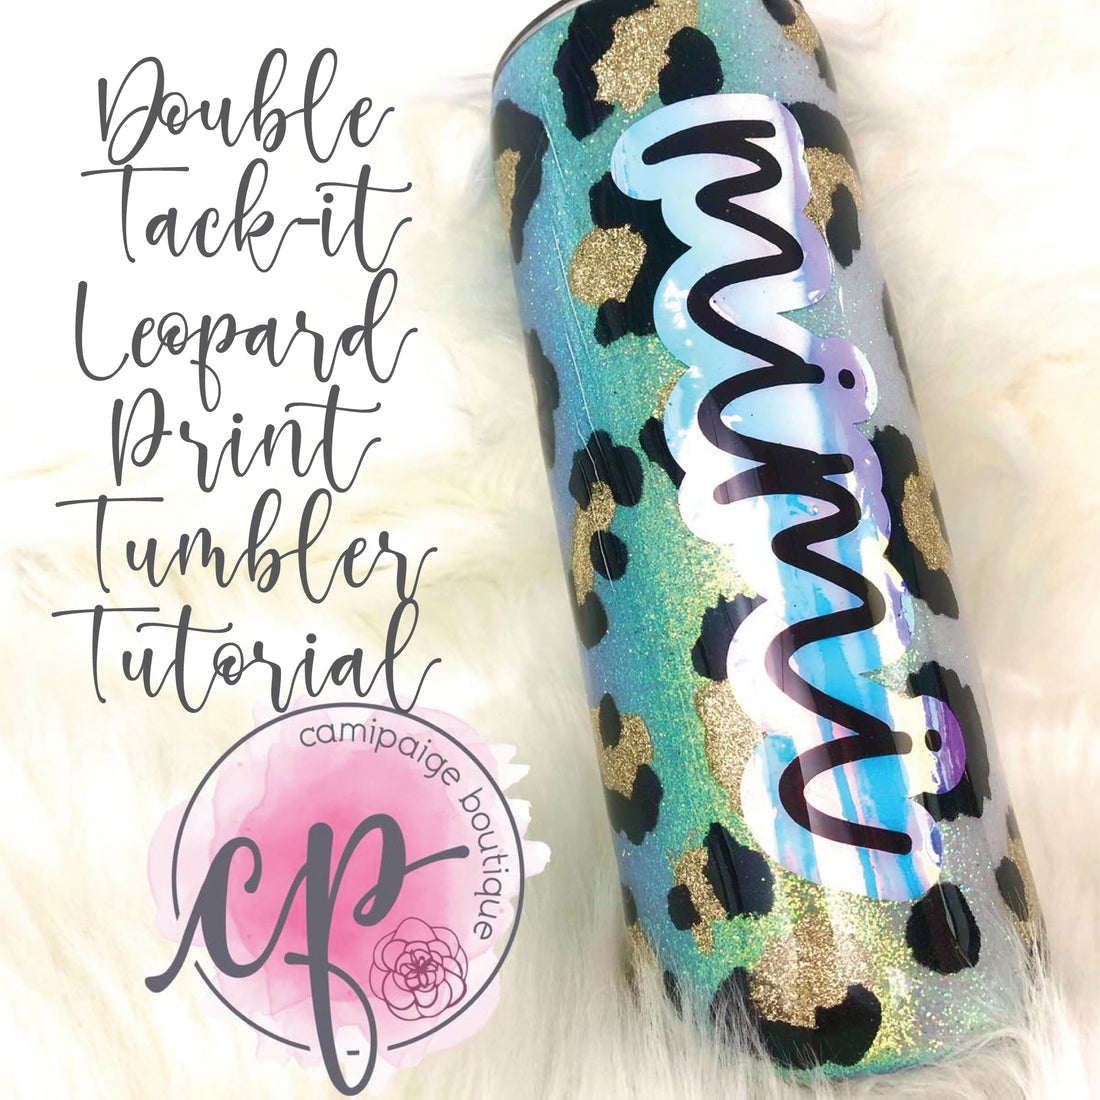 Double Tack-it Leopard Print Tumbler Tutorial